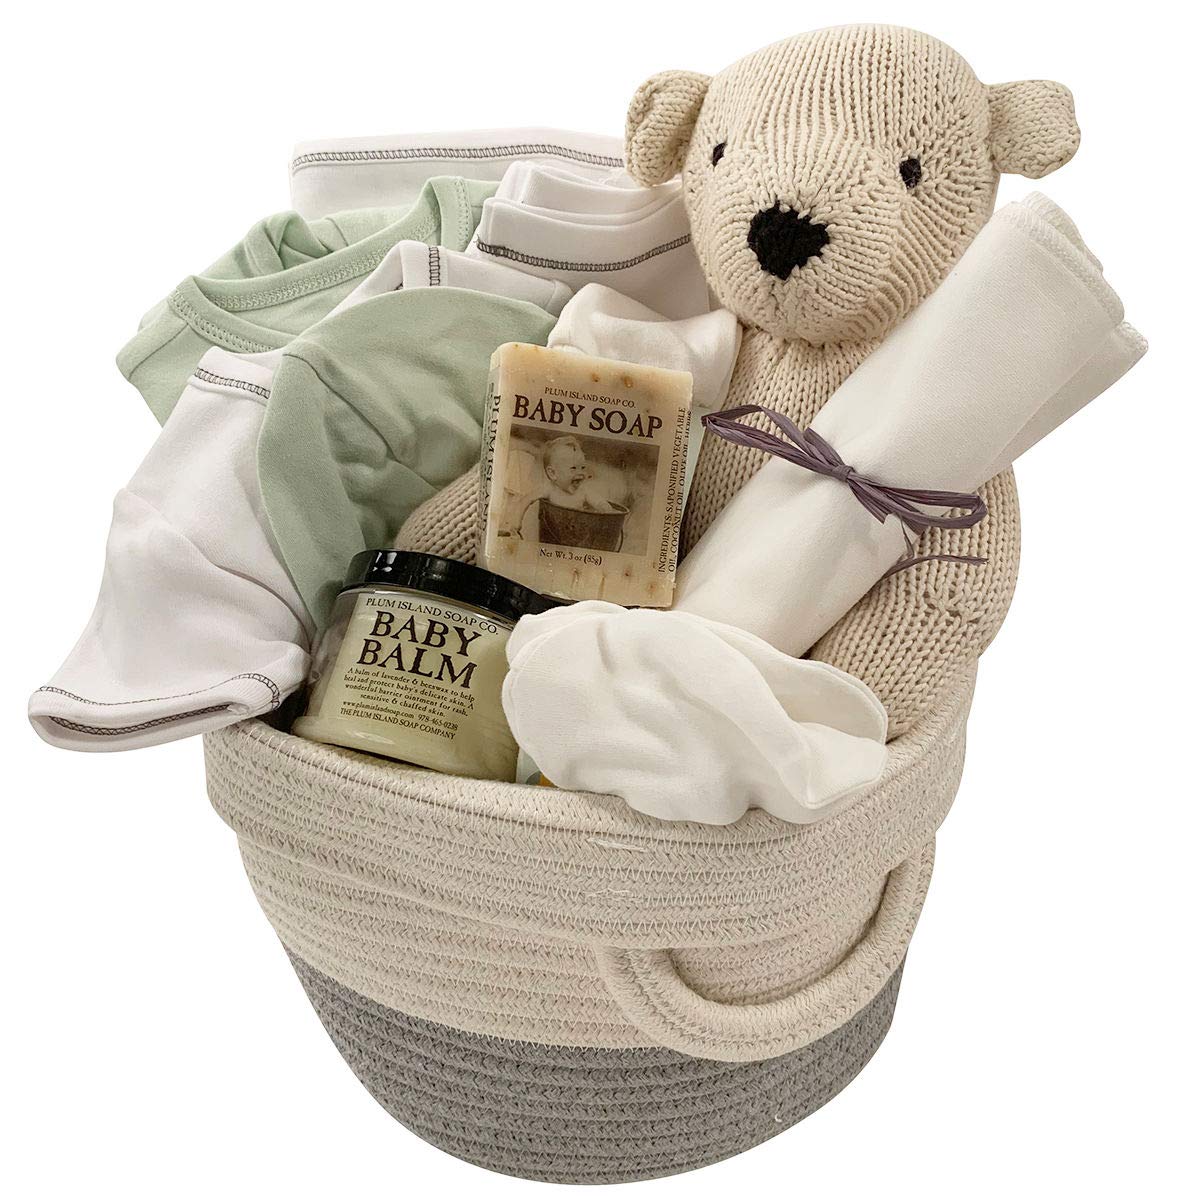 Luxury Baby Gift - Corporate Baby Gift Basket for Boy or Girl